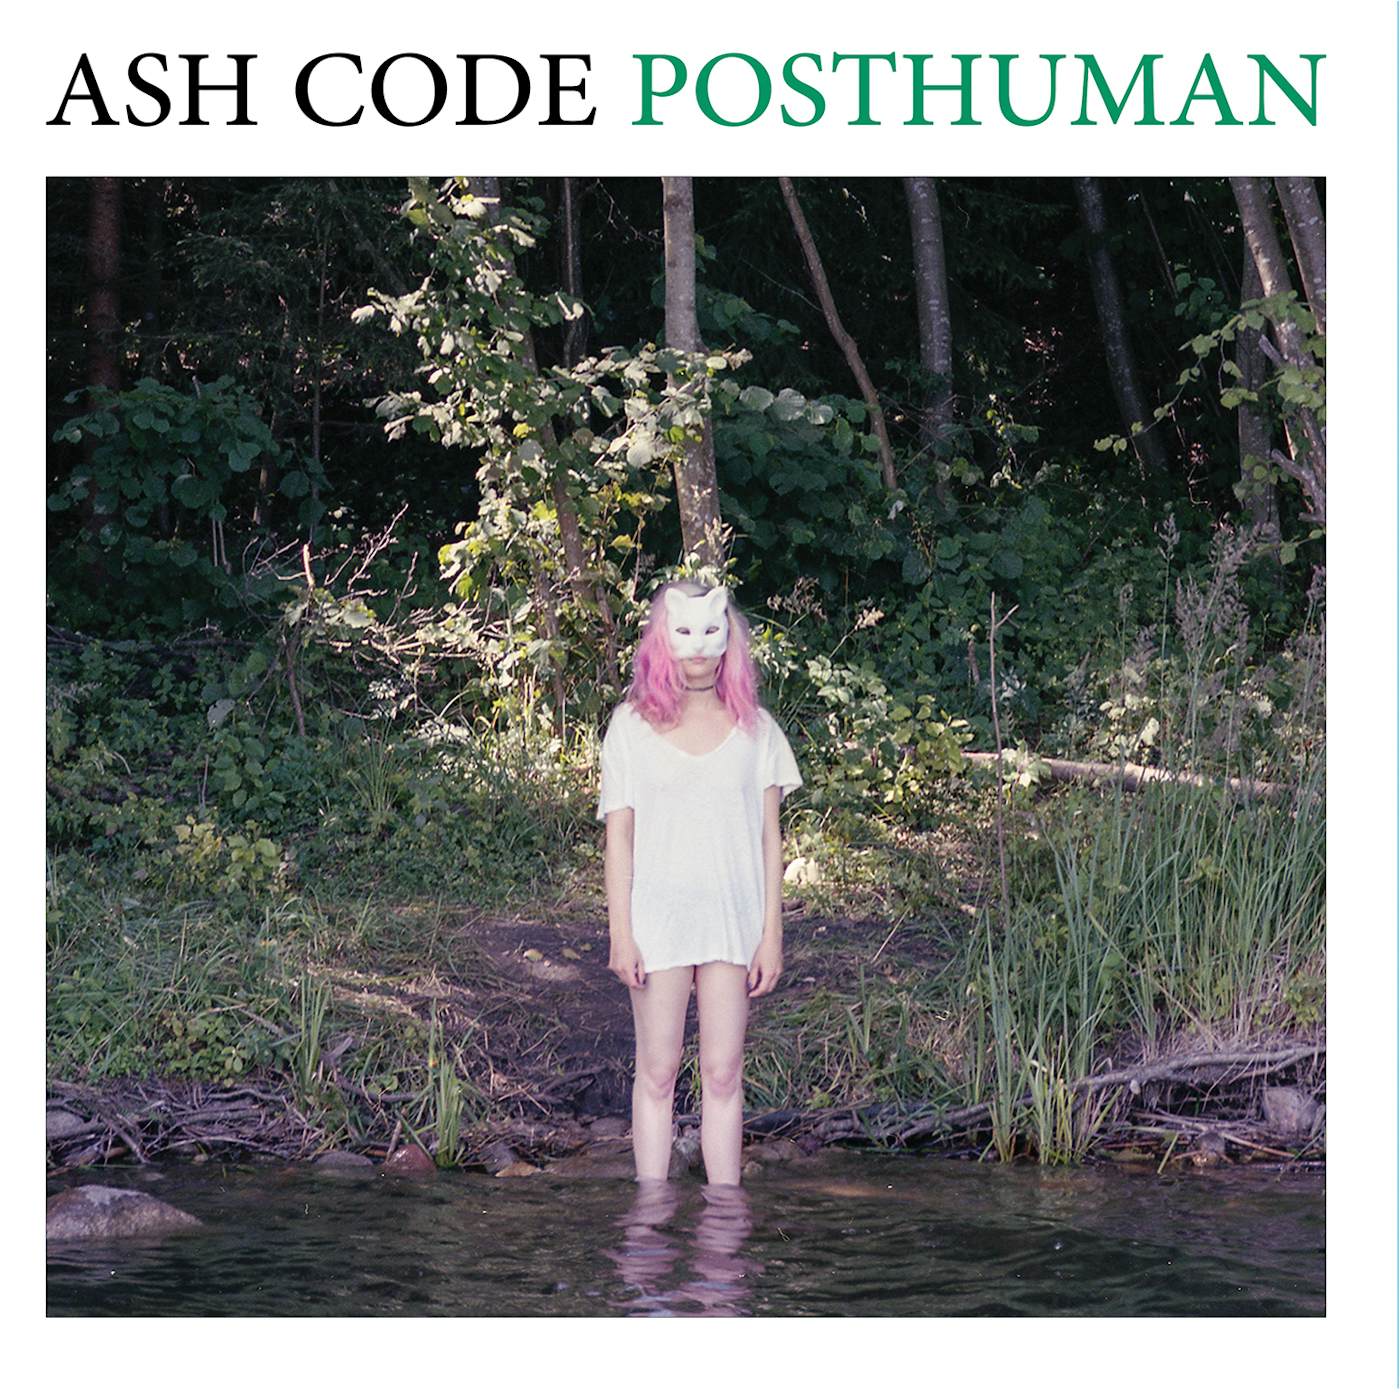 Ash Code Posthuman Vinyl Record